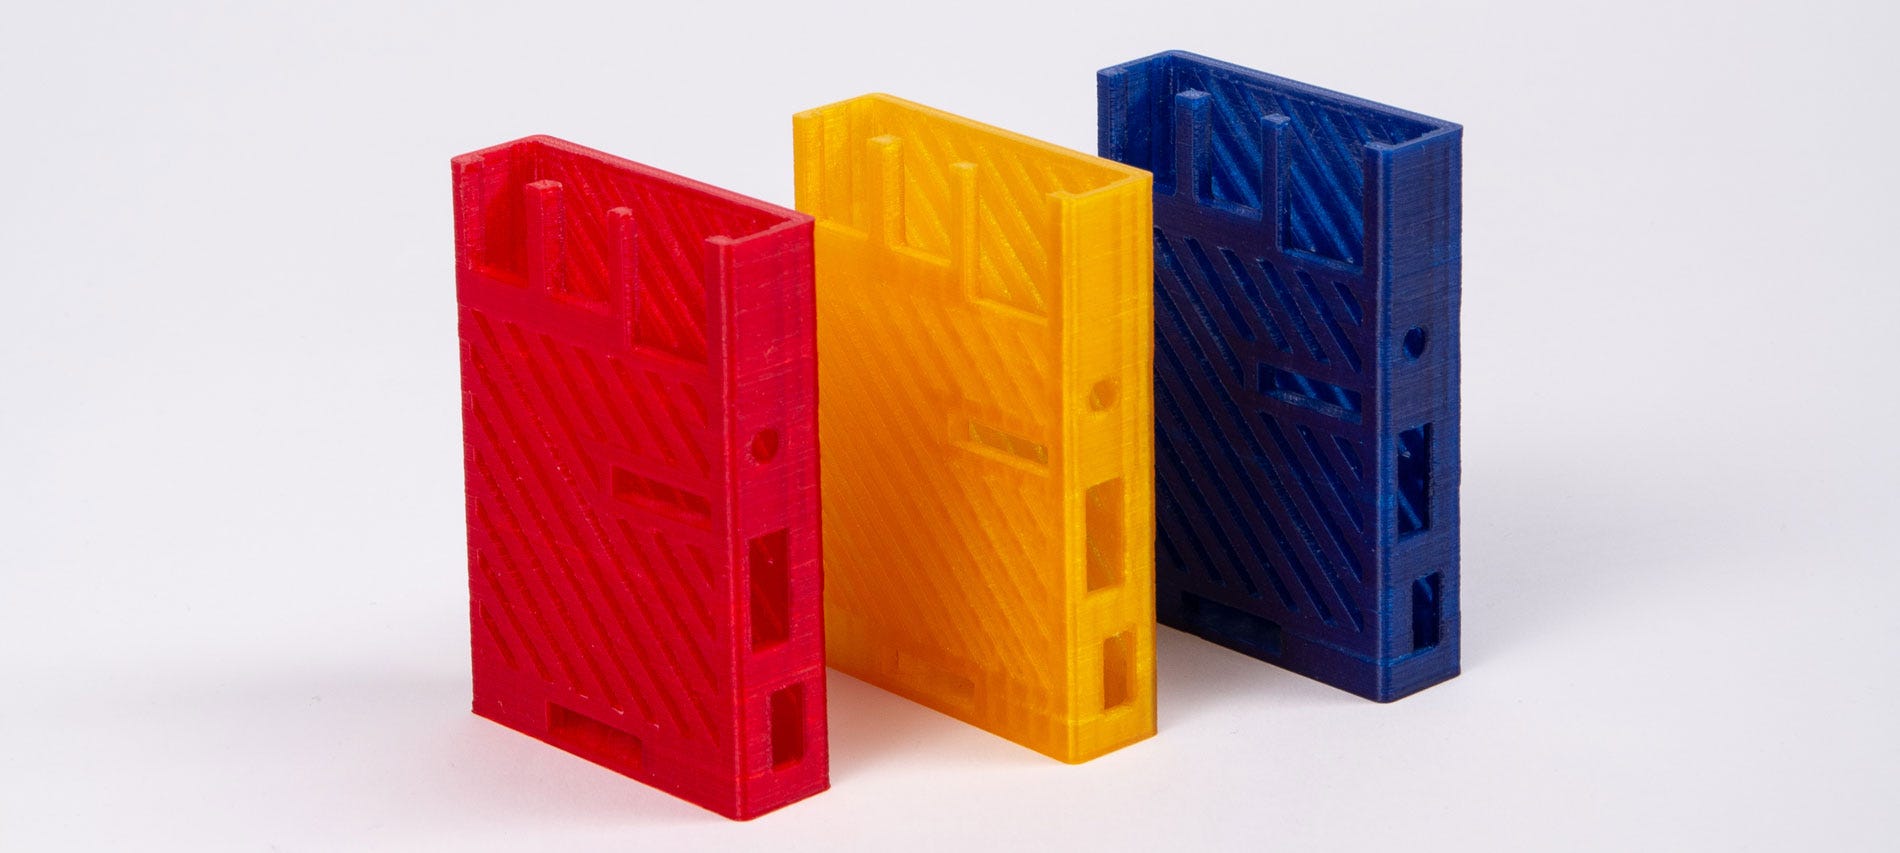 PET-G: 3D Printing Materials Overview | by Zmorph SA | Medium